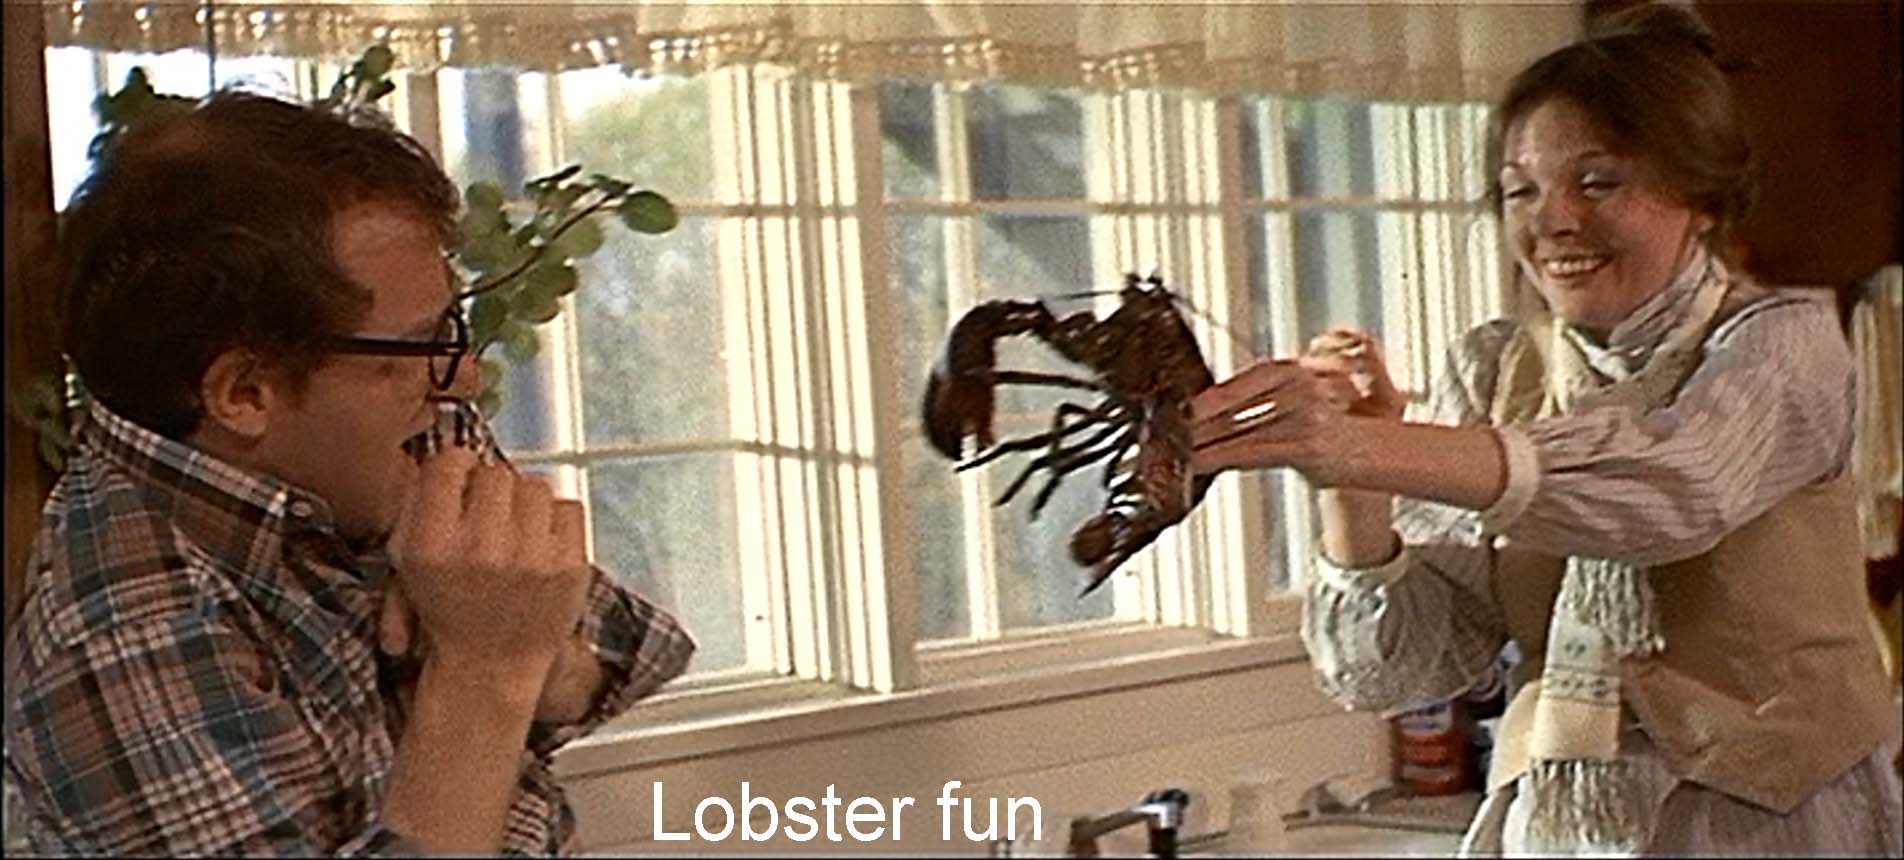  Lobster fun